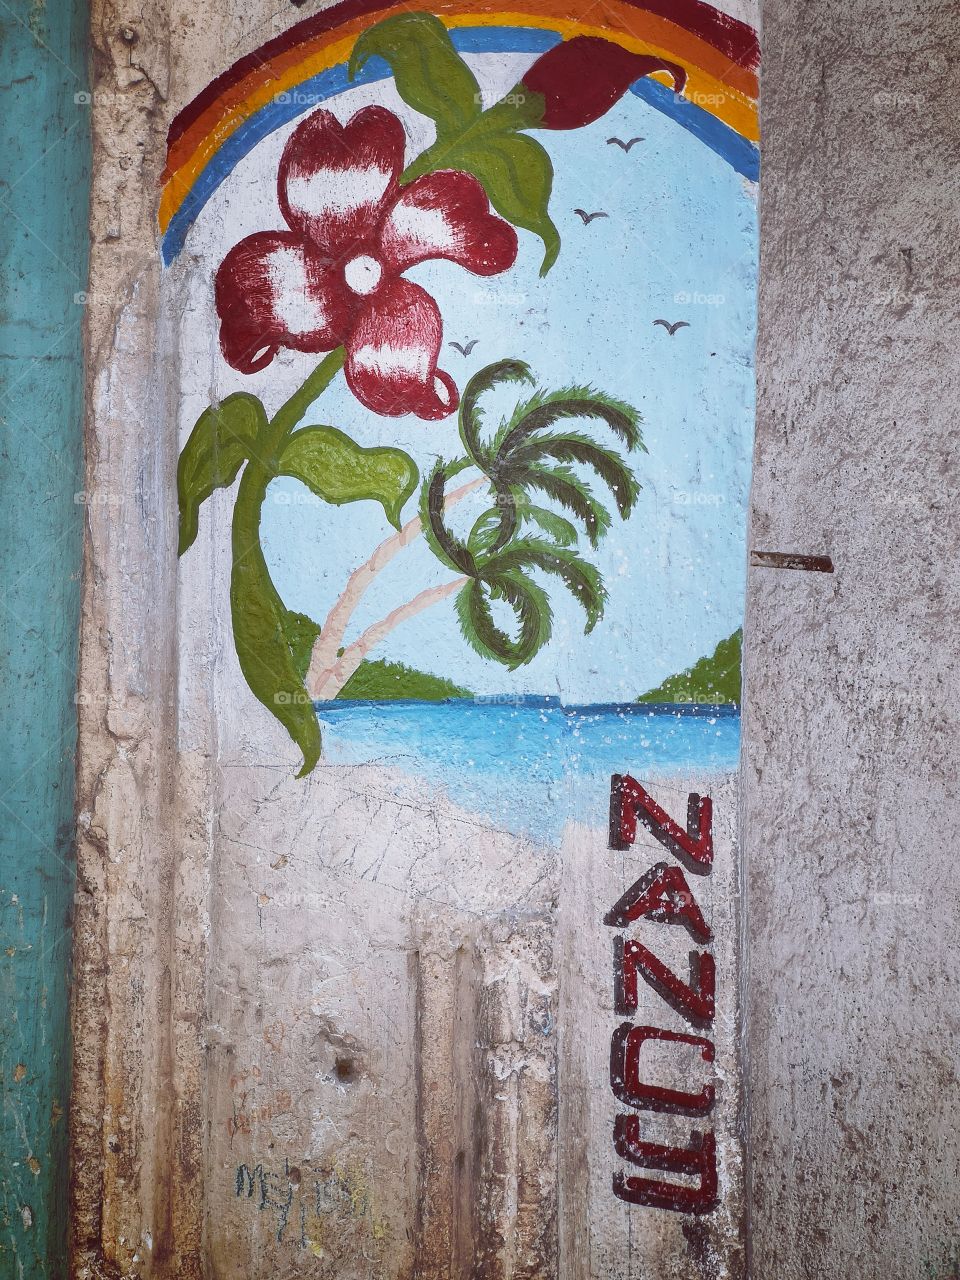 graffiti on streets of Havana, Cuba